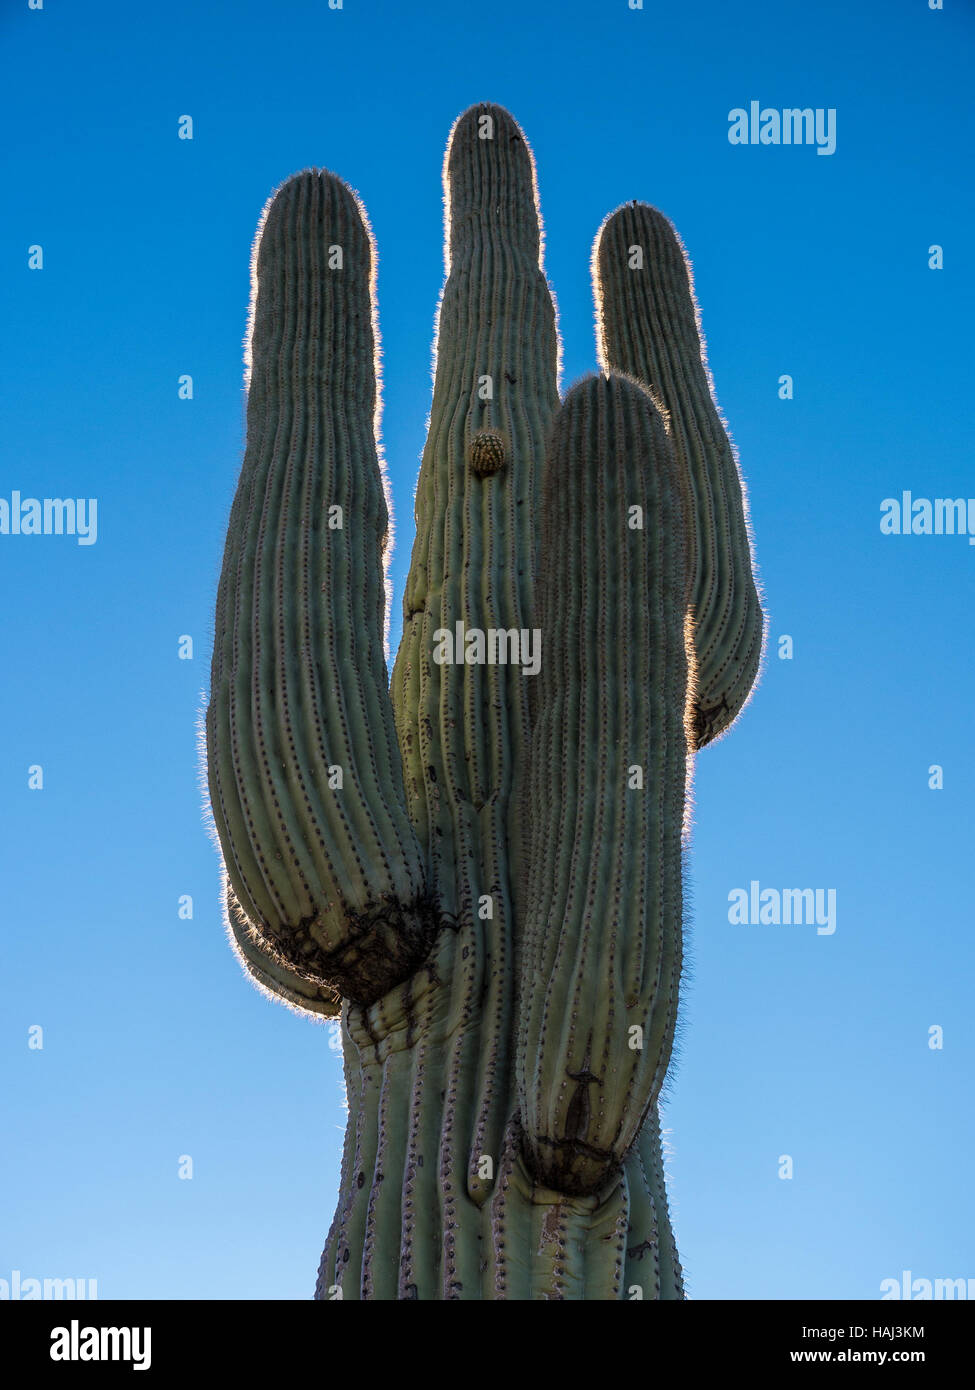 Saguaro cactus (Carnegiea gigantea) at Lost Dutchman State Park. Stock Photo